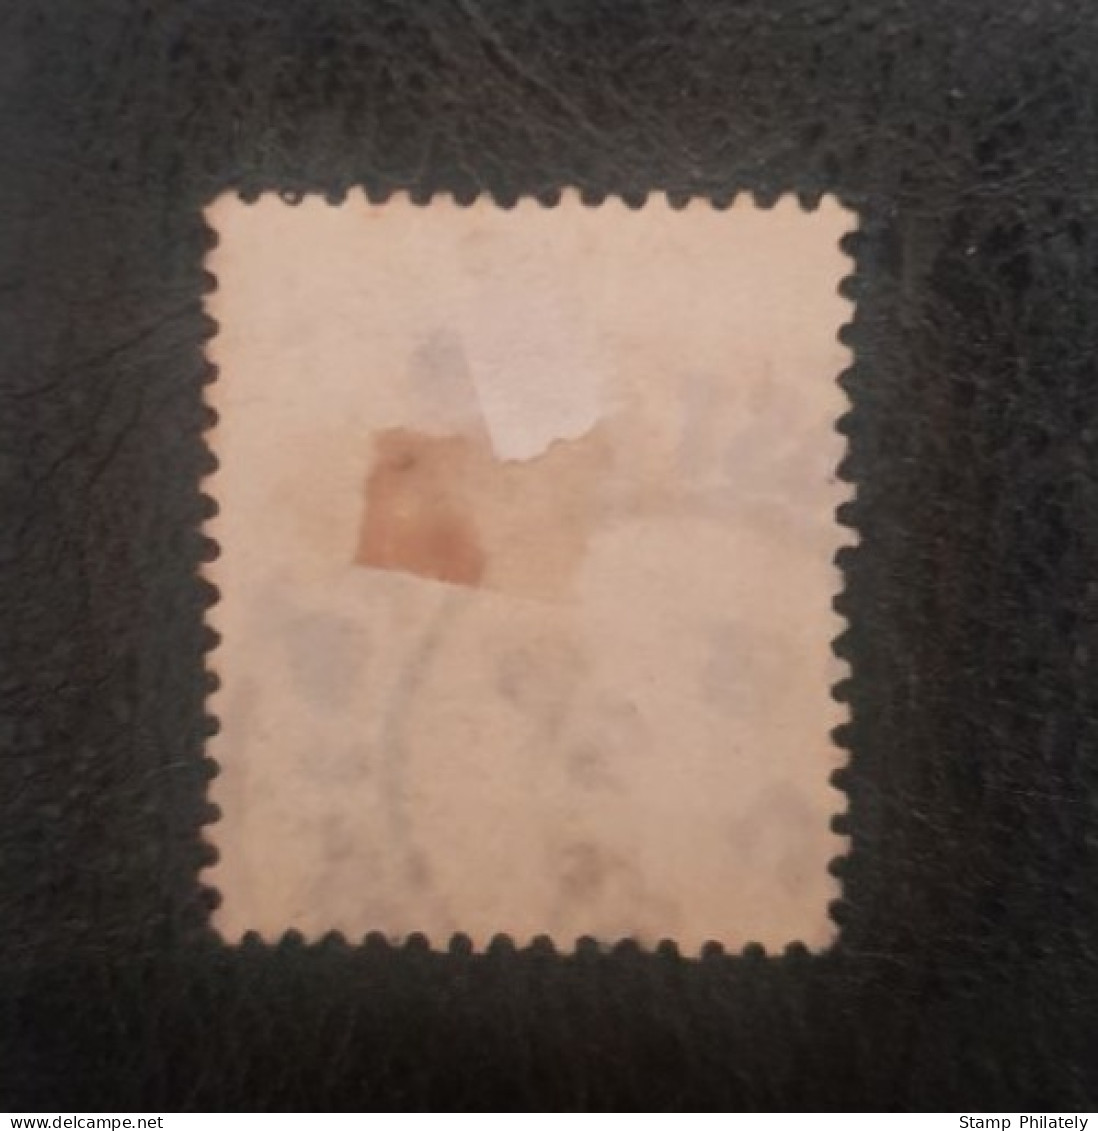 France Levant Classic Used Stamp - Usati